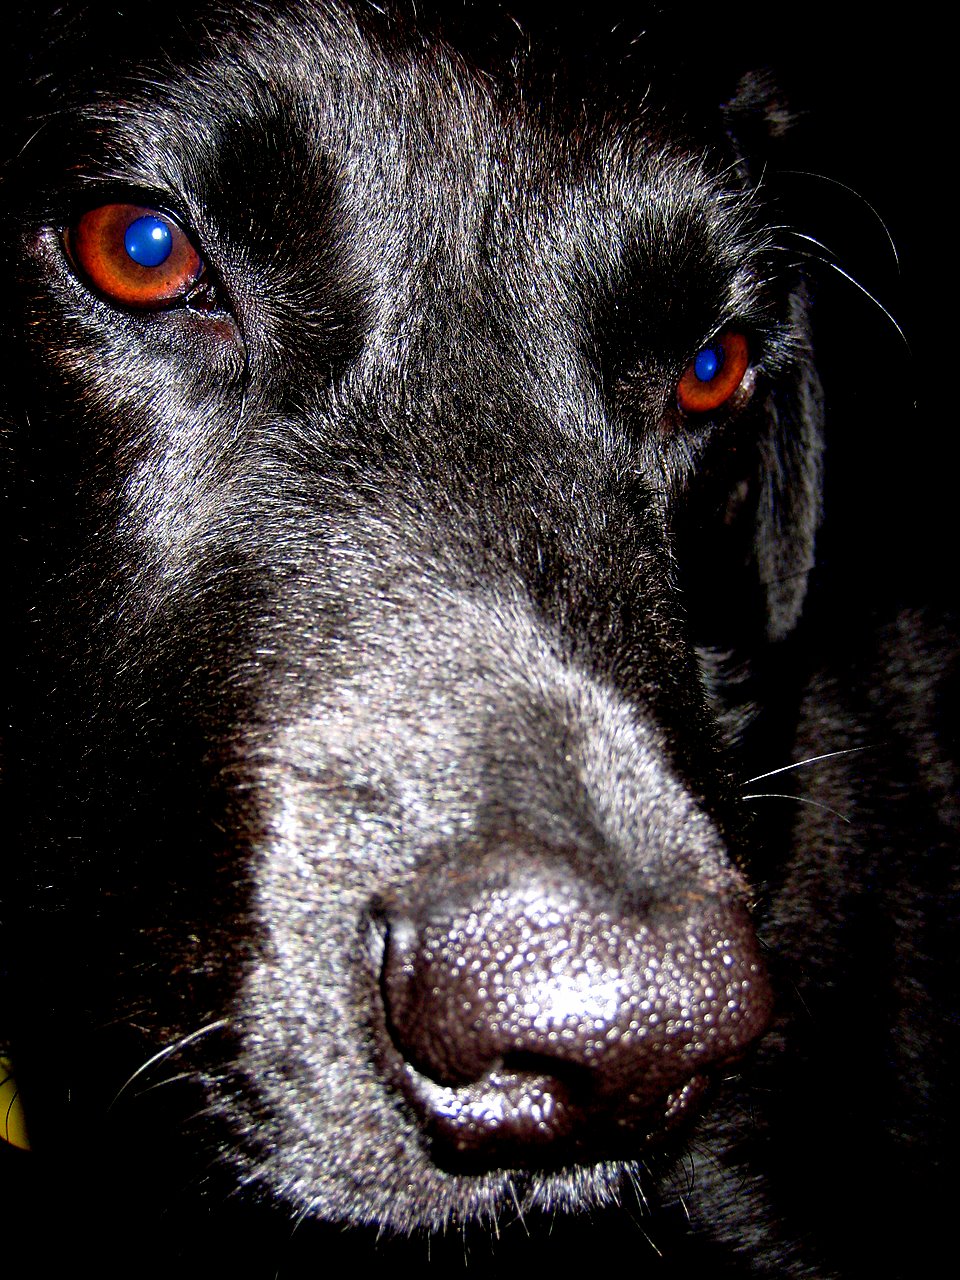 a close up of a dog's face with a sad look on its face